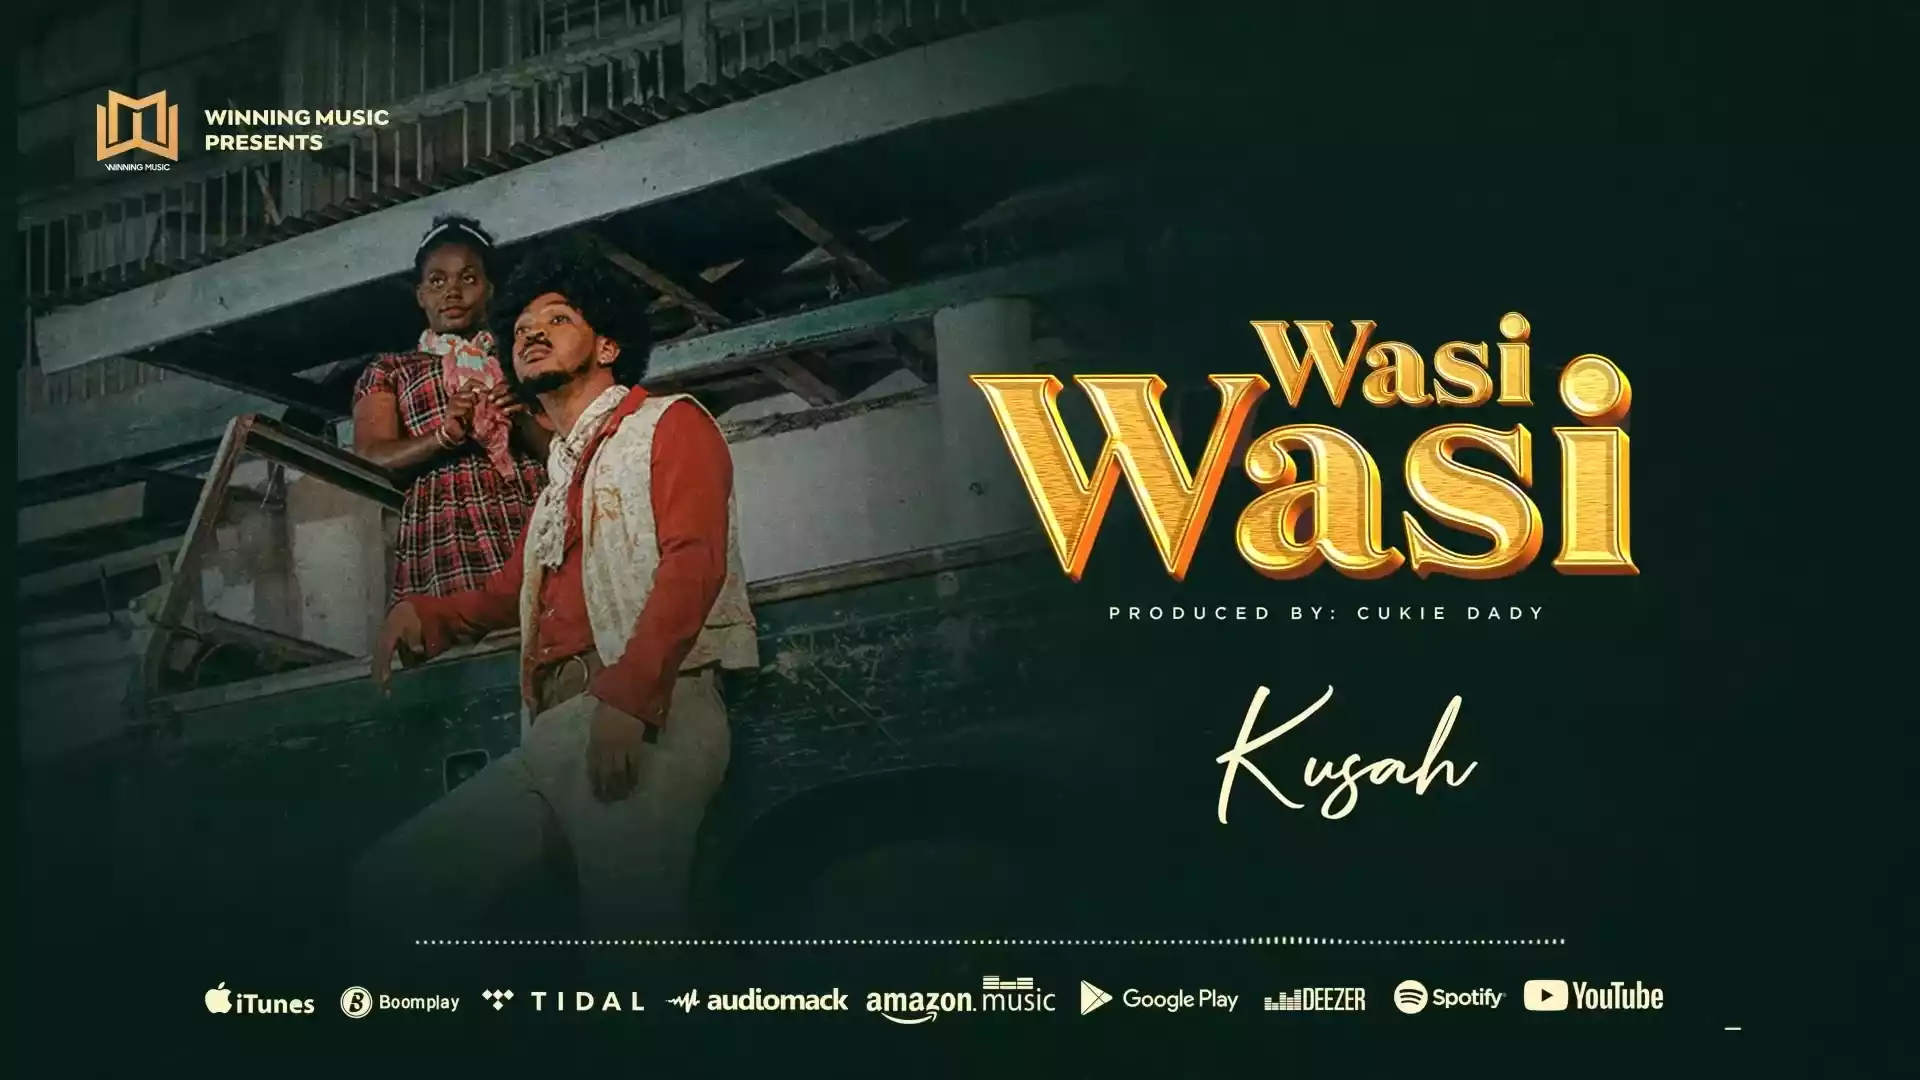 kusah wasiwasi